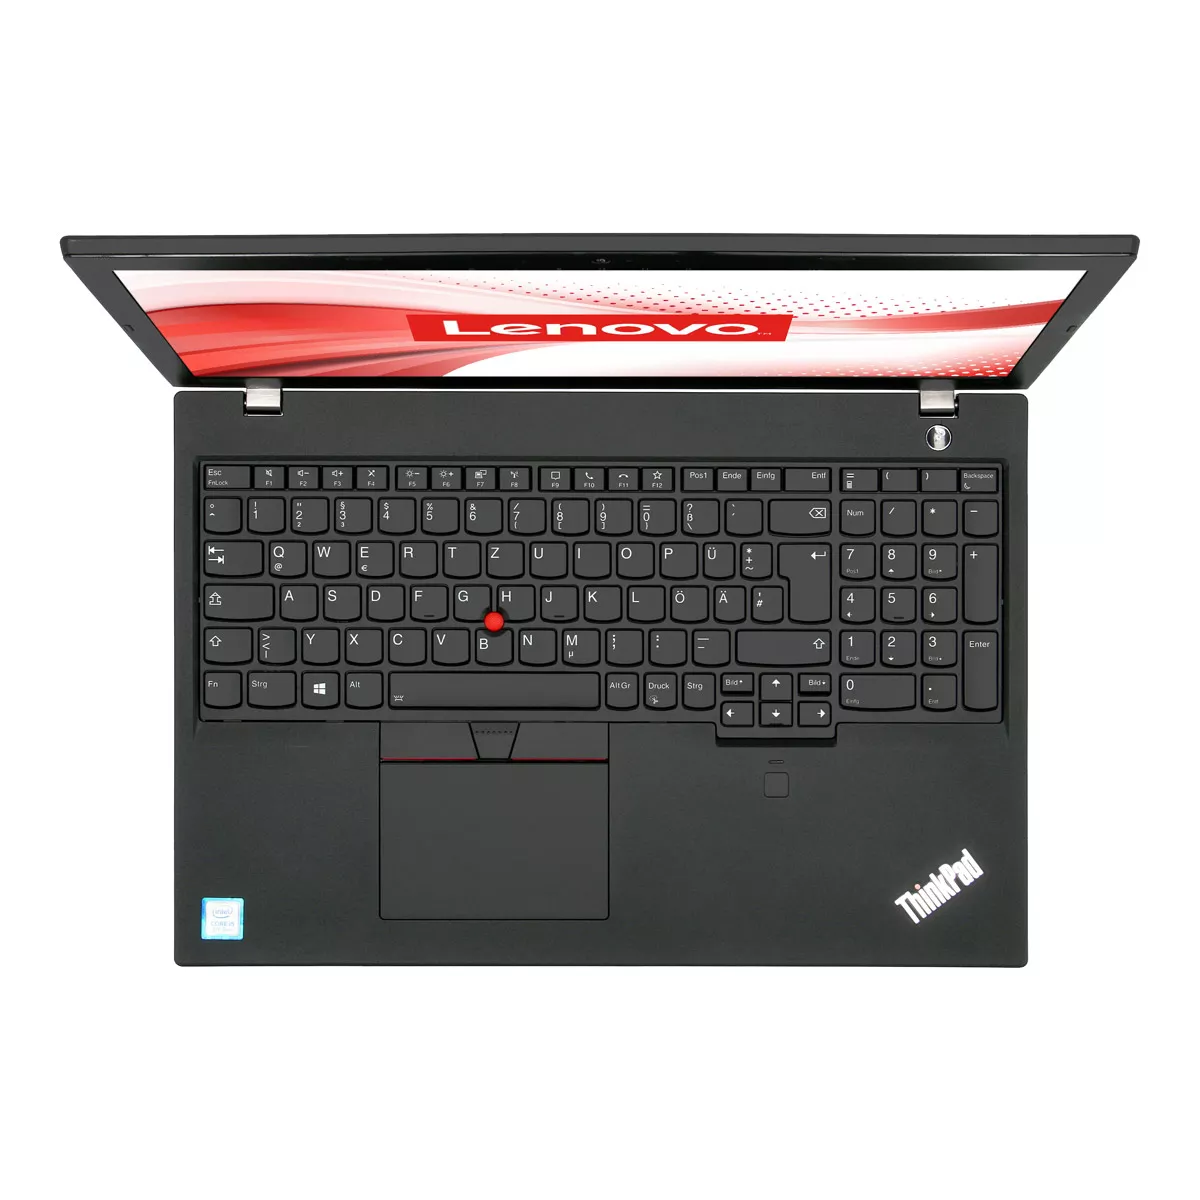 Lenovo ThinkPad L580 Core i5 8250U Full-HD 16 GB 250 GB M.2 nVME SSD Webcam A